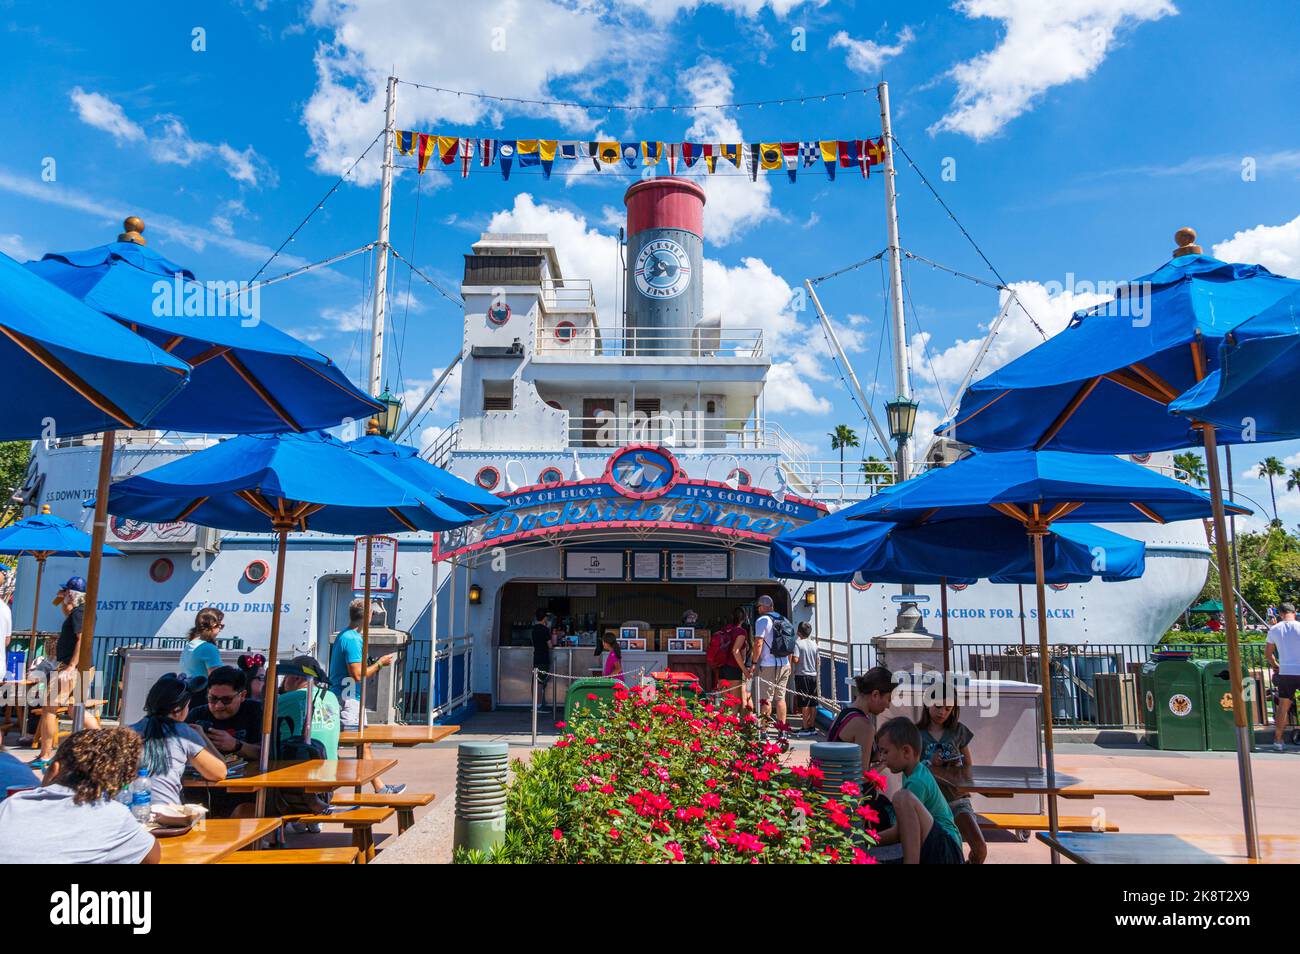 Dockside Diner, restaurant à service rapide à Hollywood Studios - Walt Disney World Resort, Lake Buena Vista, Floride, États-Unis Banque D'Images